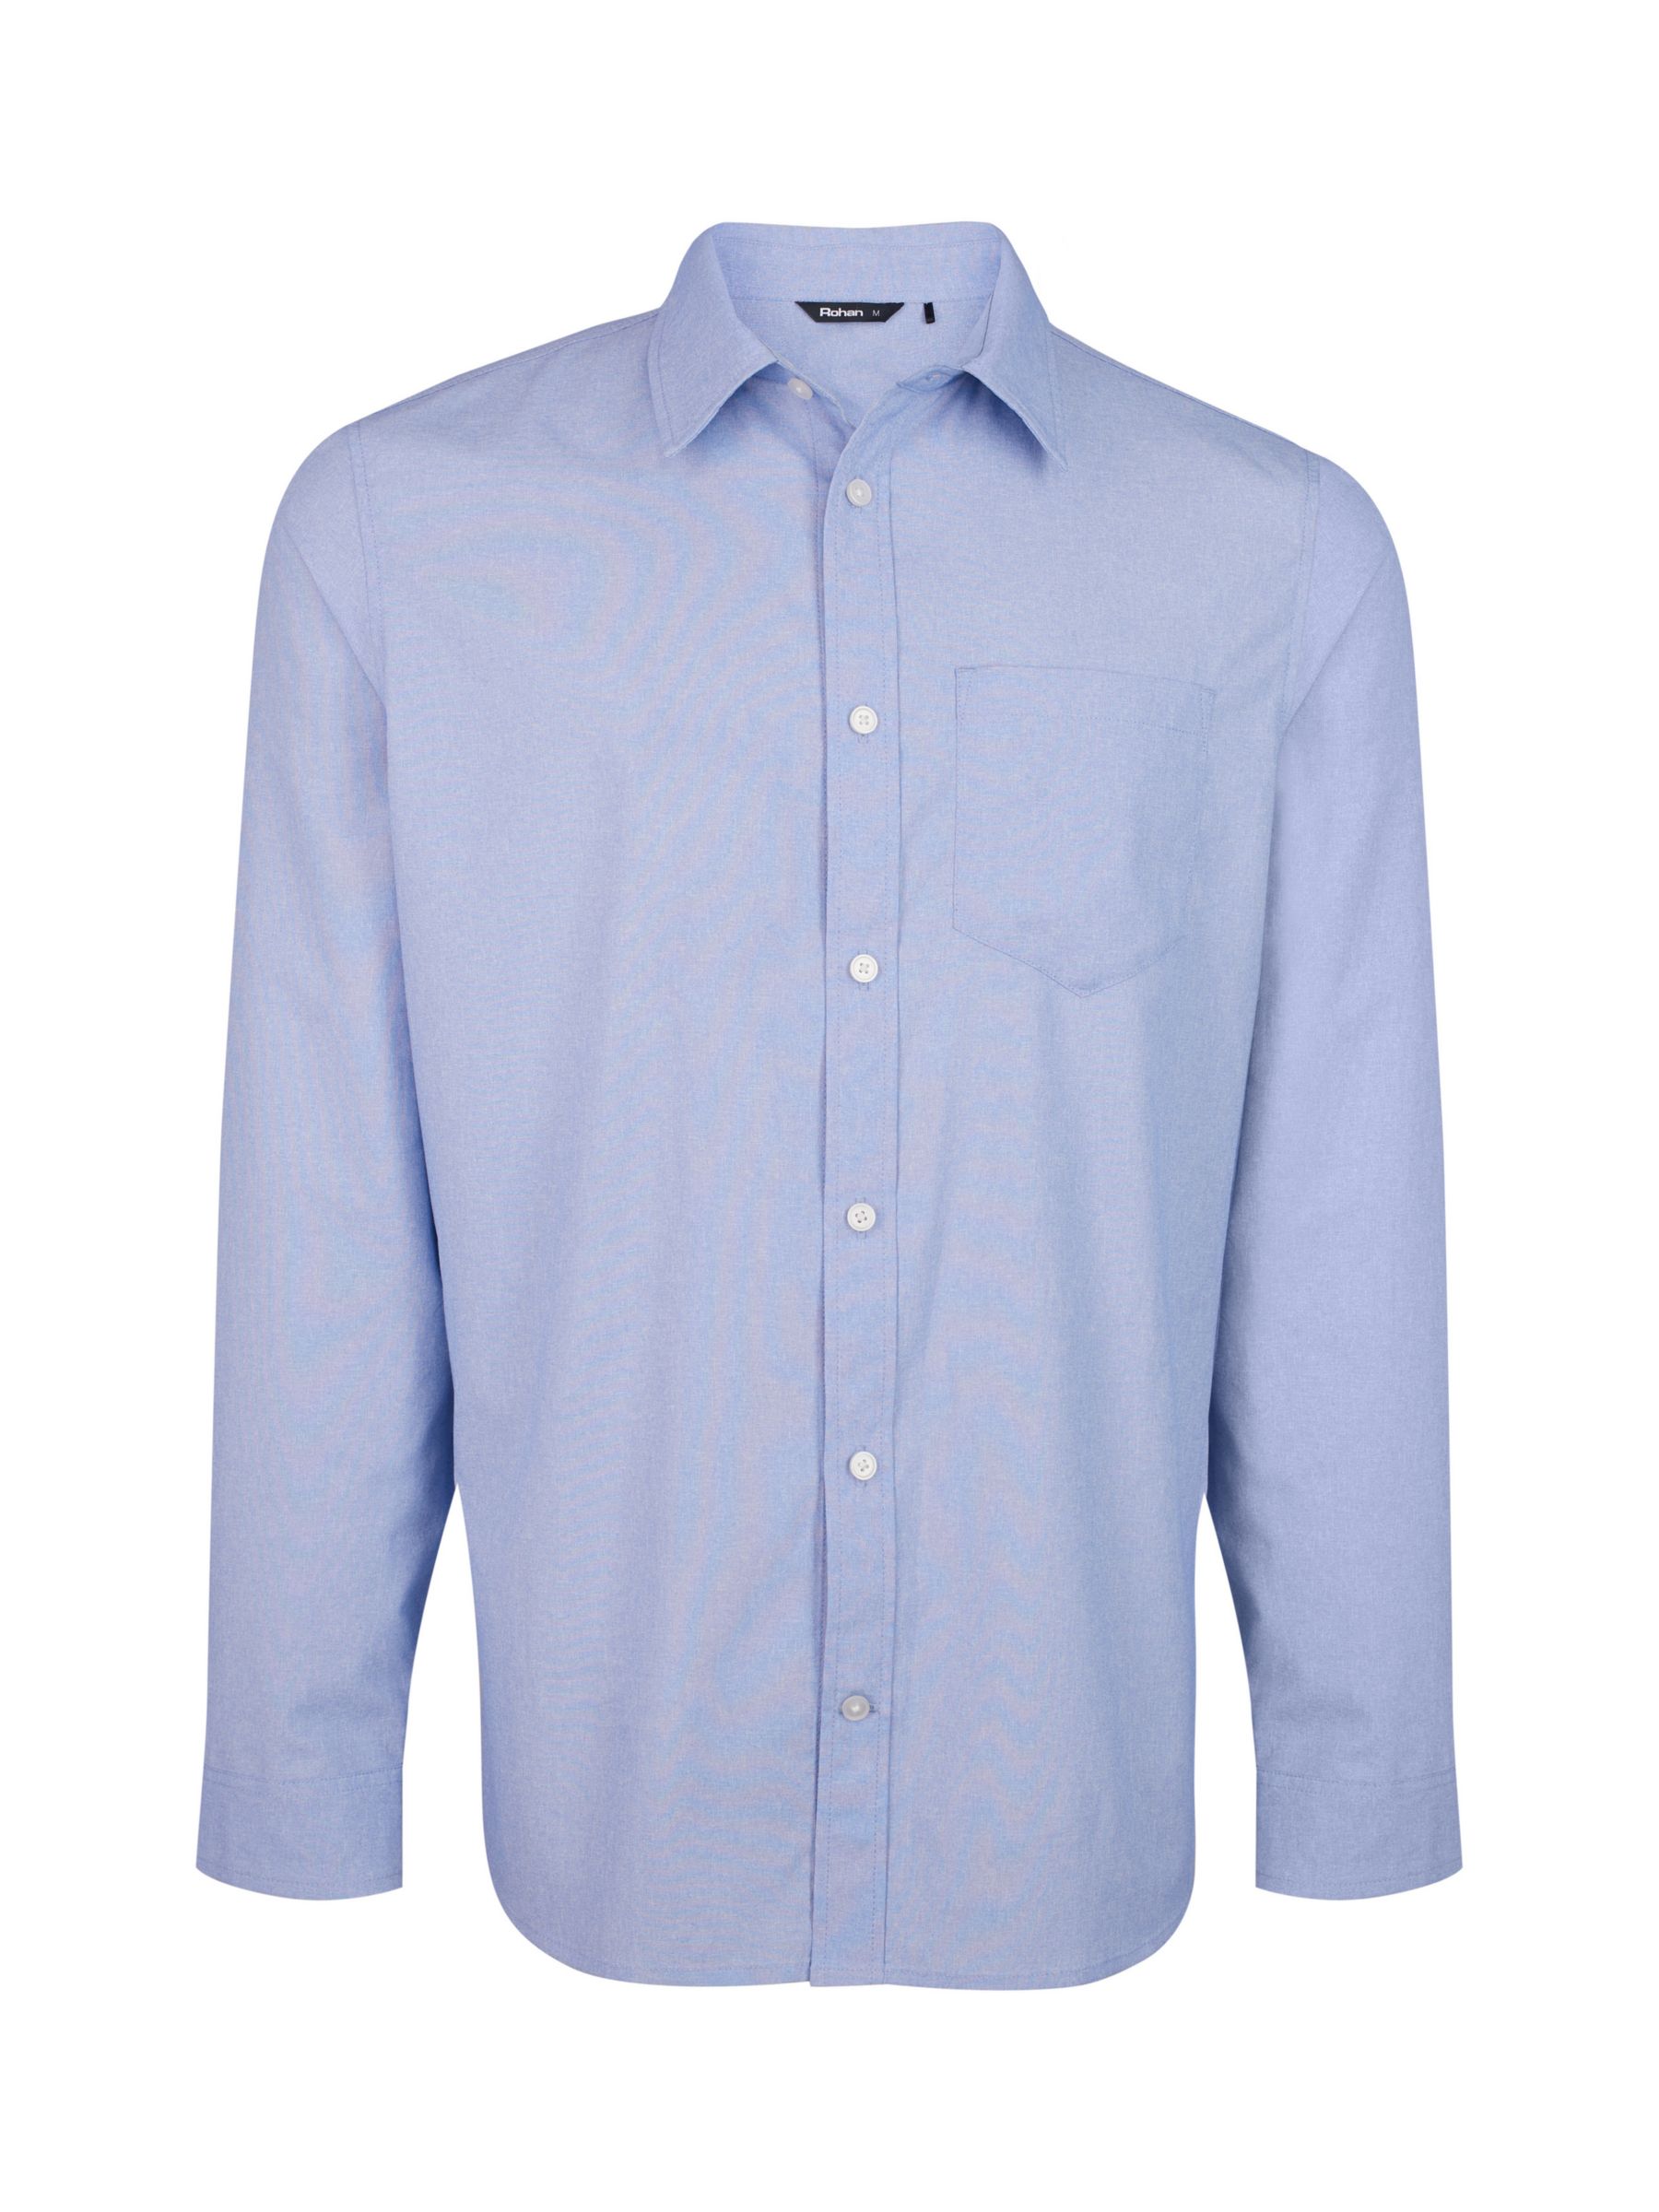 Buy Rohan Finchley Lightweight Long Sleeve Shirt, Ridge Blue Online at johnlewis.com